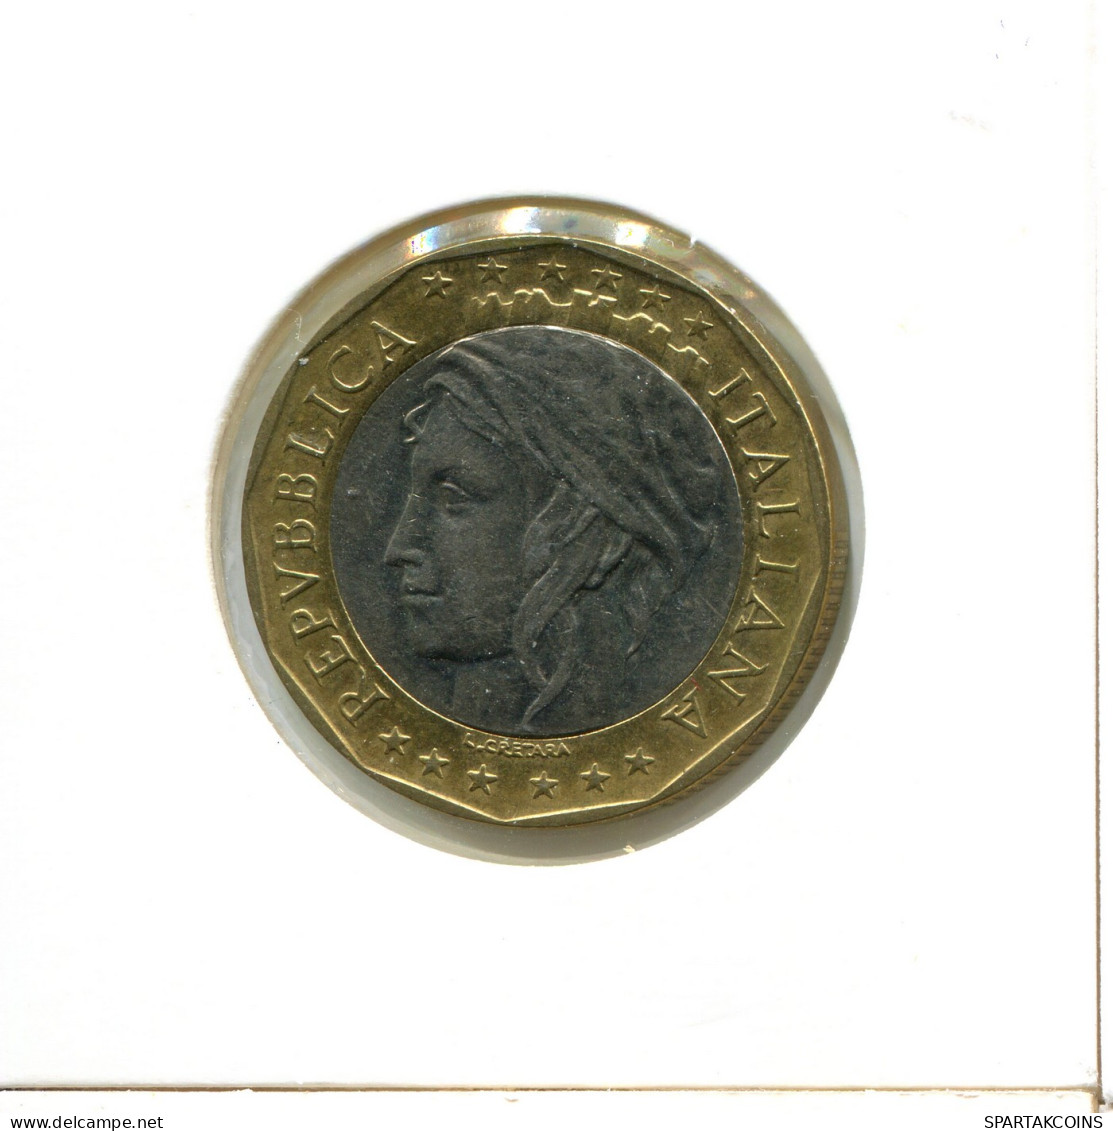 1000 LIRE 1998 ITALIA ITALY Moneda BIMETALLIC #AX861.E - 1 000 Liras